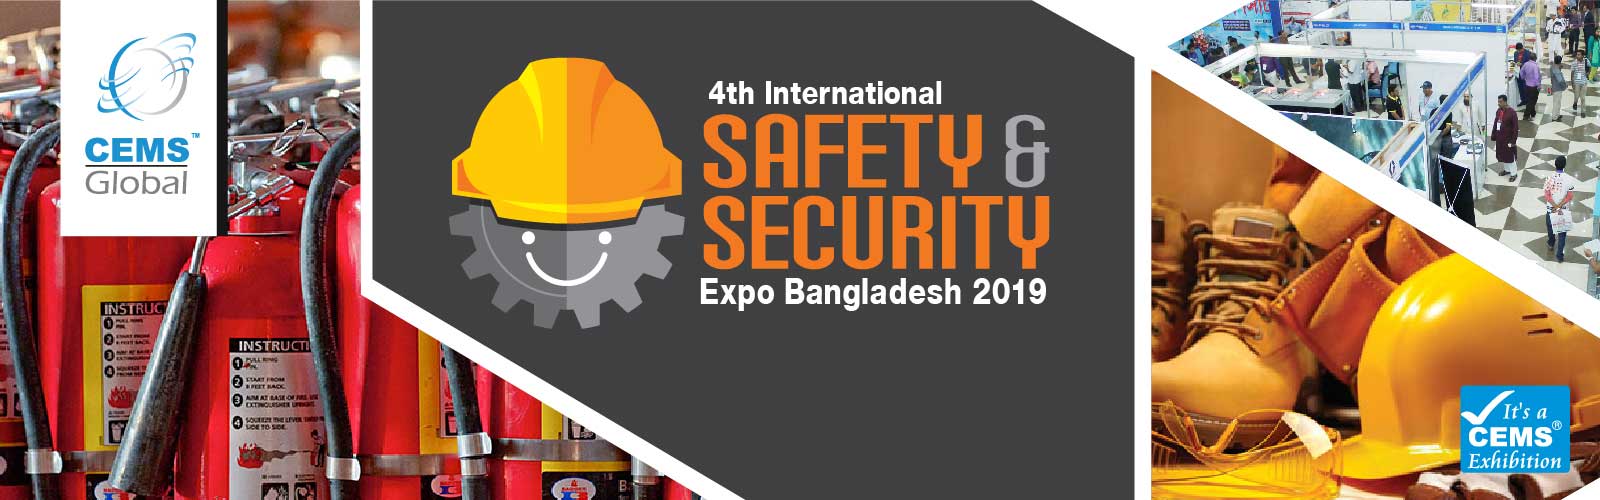  4th International Safety & Security Expo Bangladesh 2019